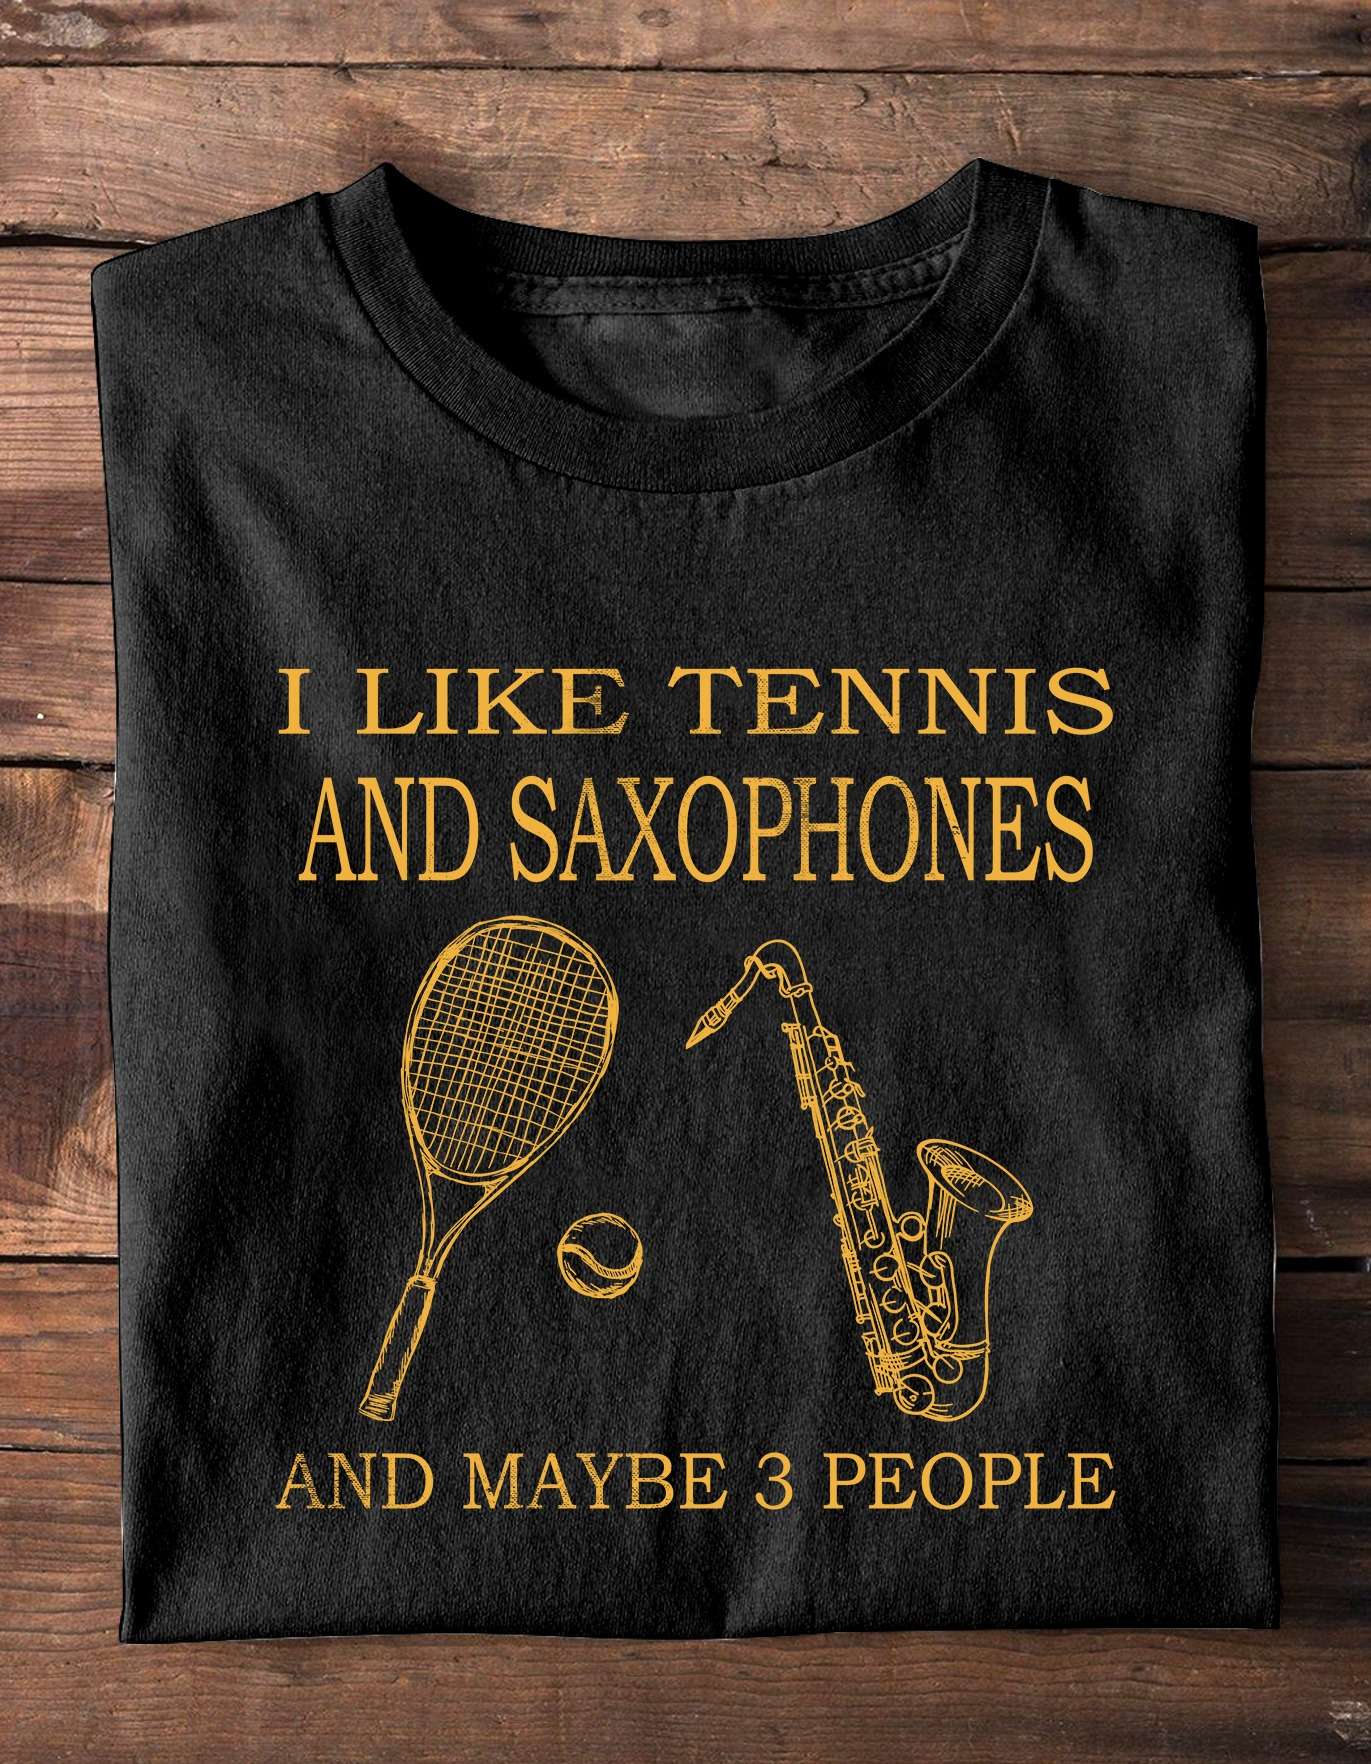 Tennis Saxaphones - I like tennis and saxaphones and maybe 3 people